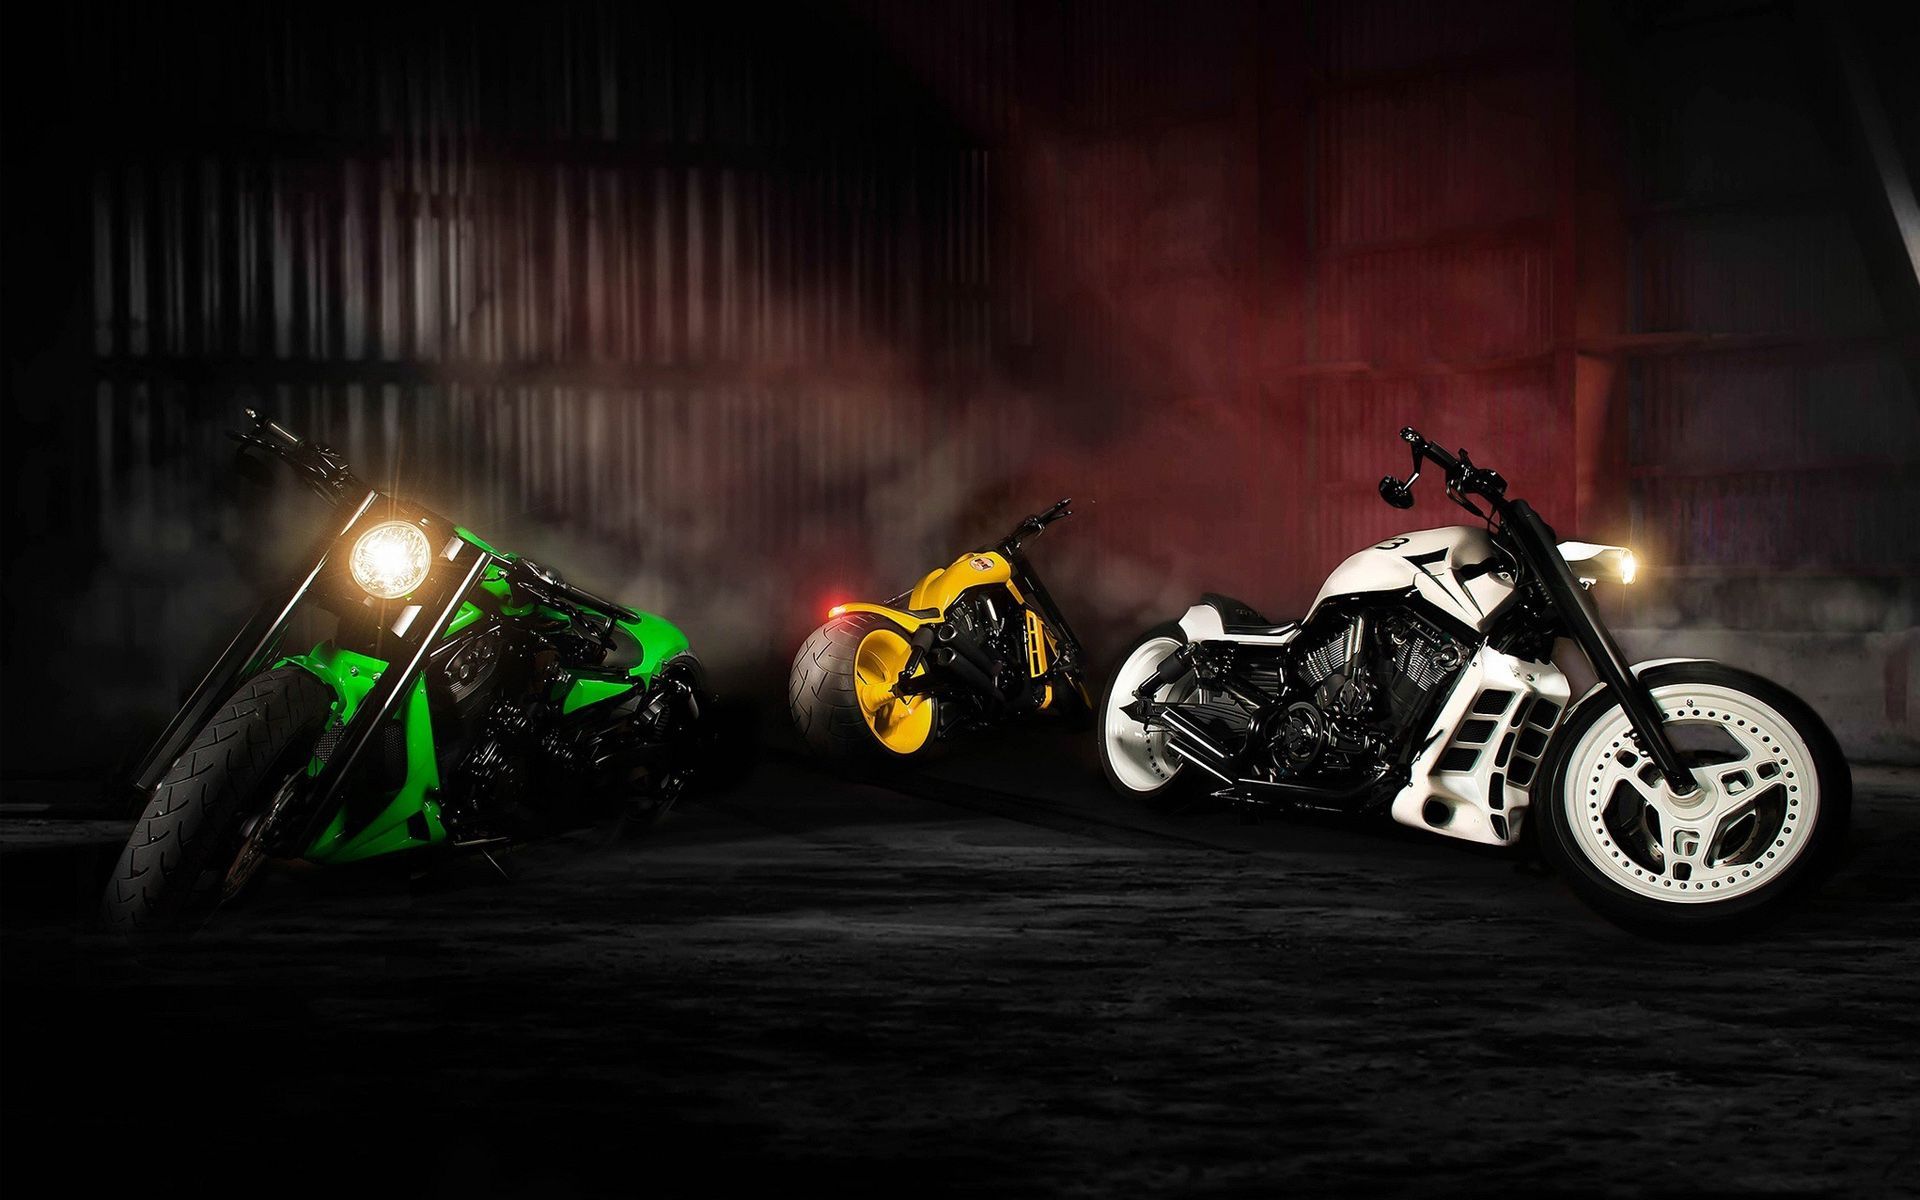 HD Motorcycle Wallpapers - Fondos de motocicleta HD gratis